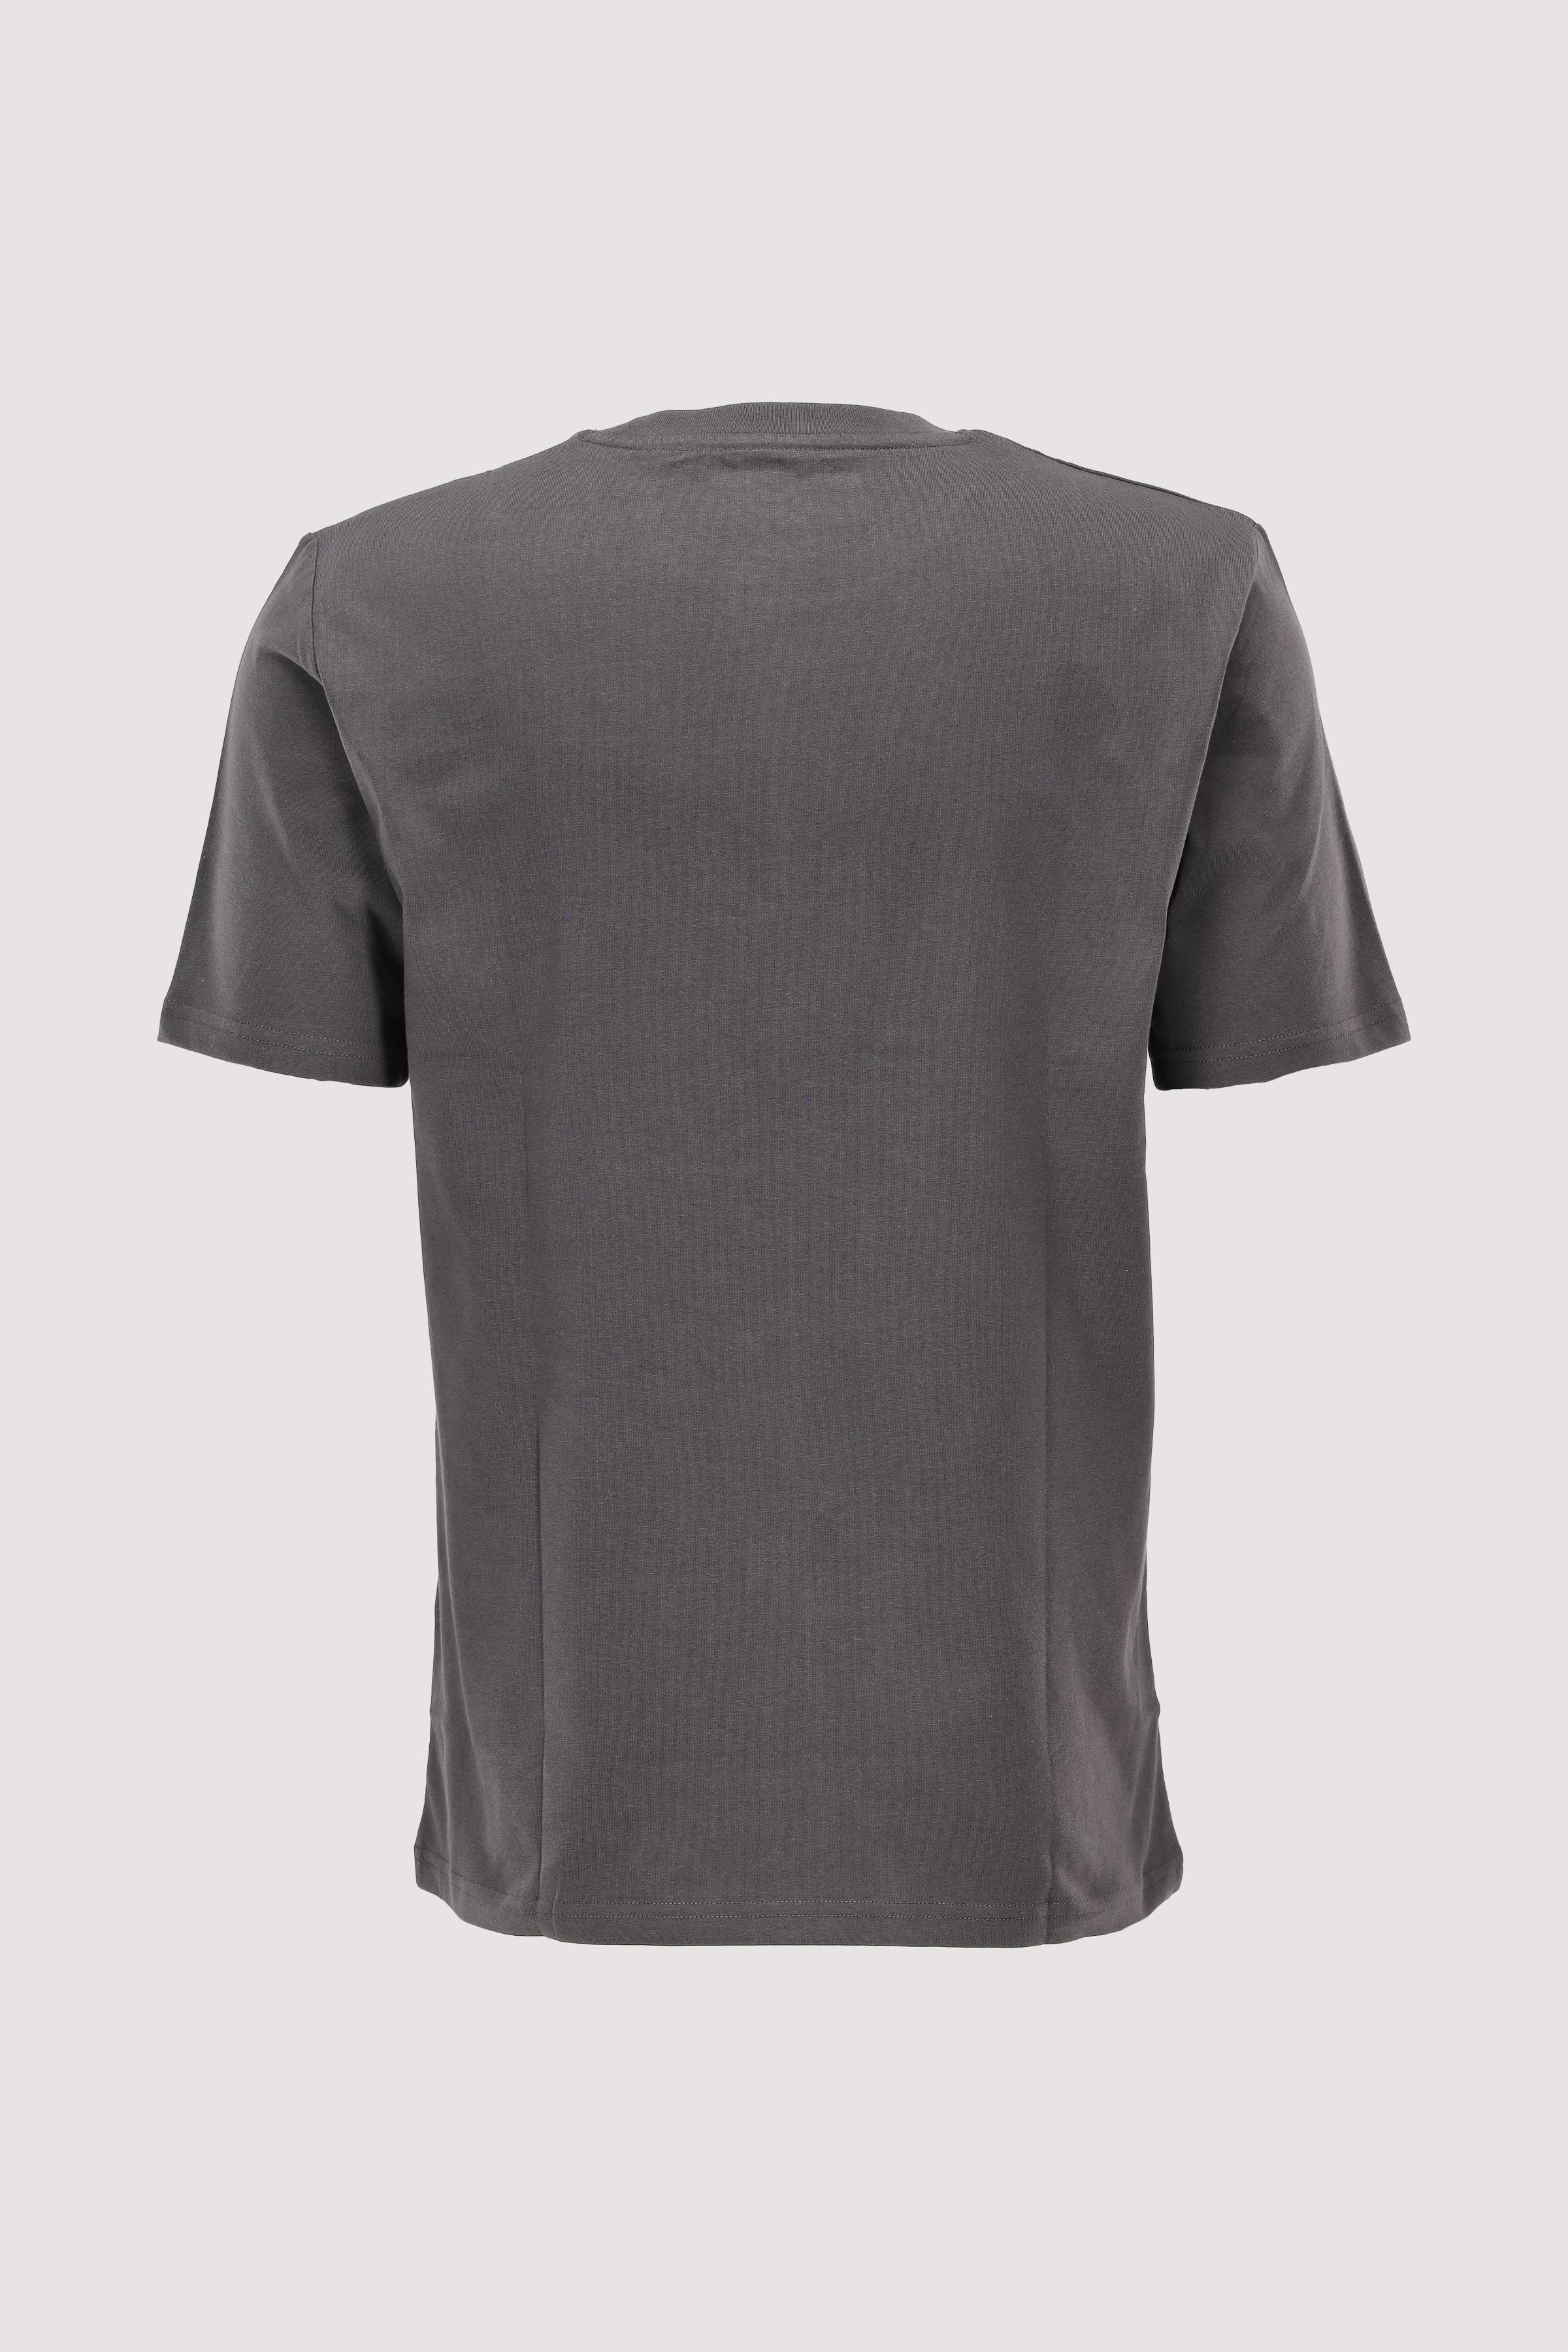 T-shirt, short sleeve, logo pr